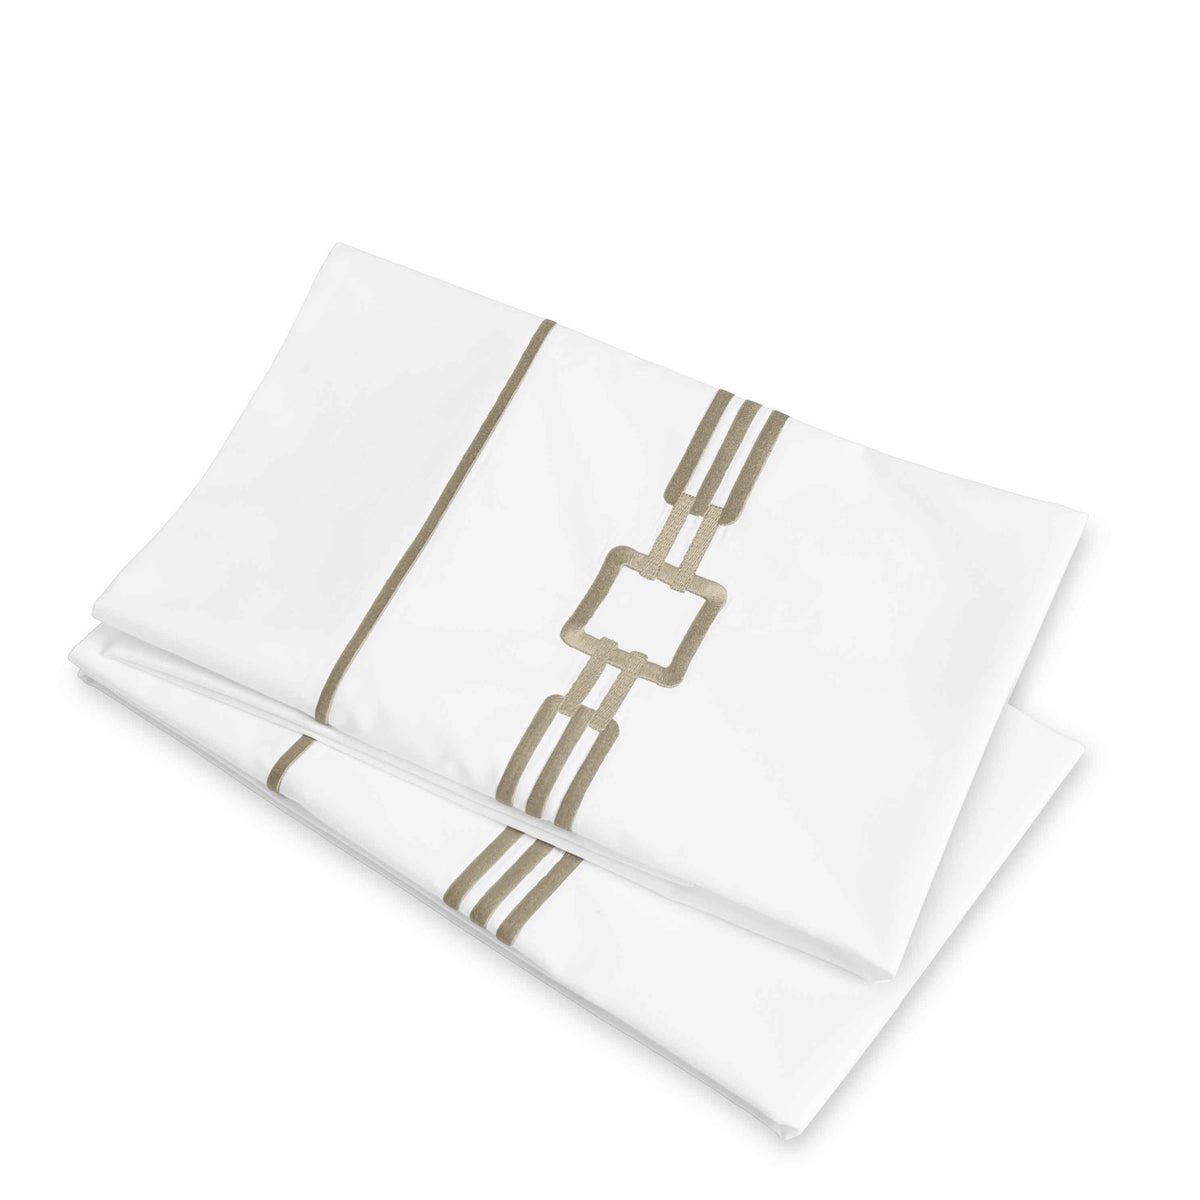 Clear Image of Signoria Retrò Pillowcases in White/Taupe Color